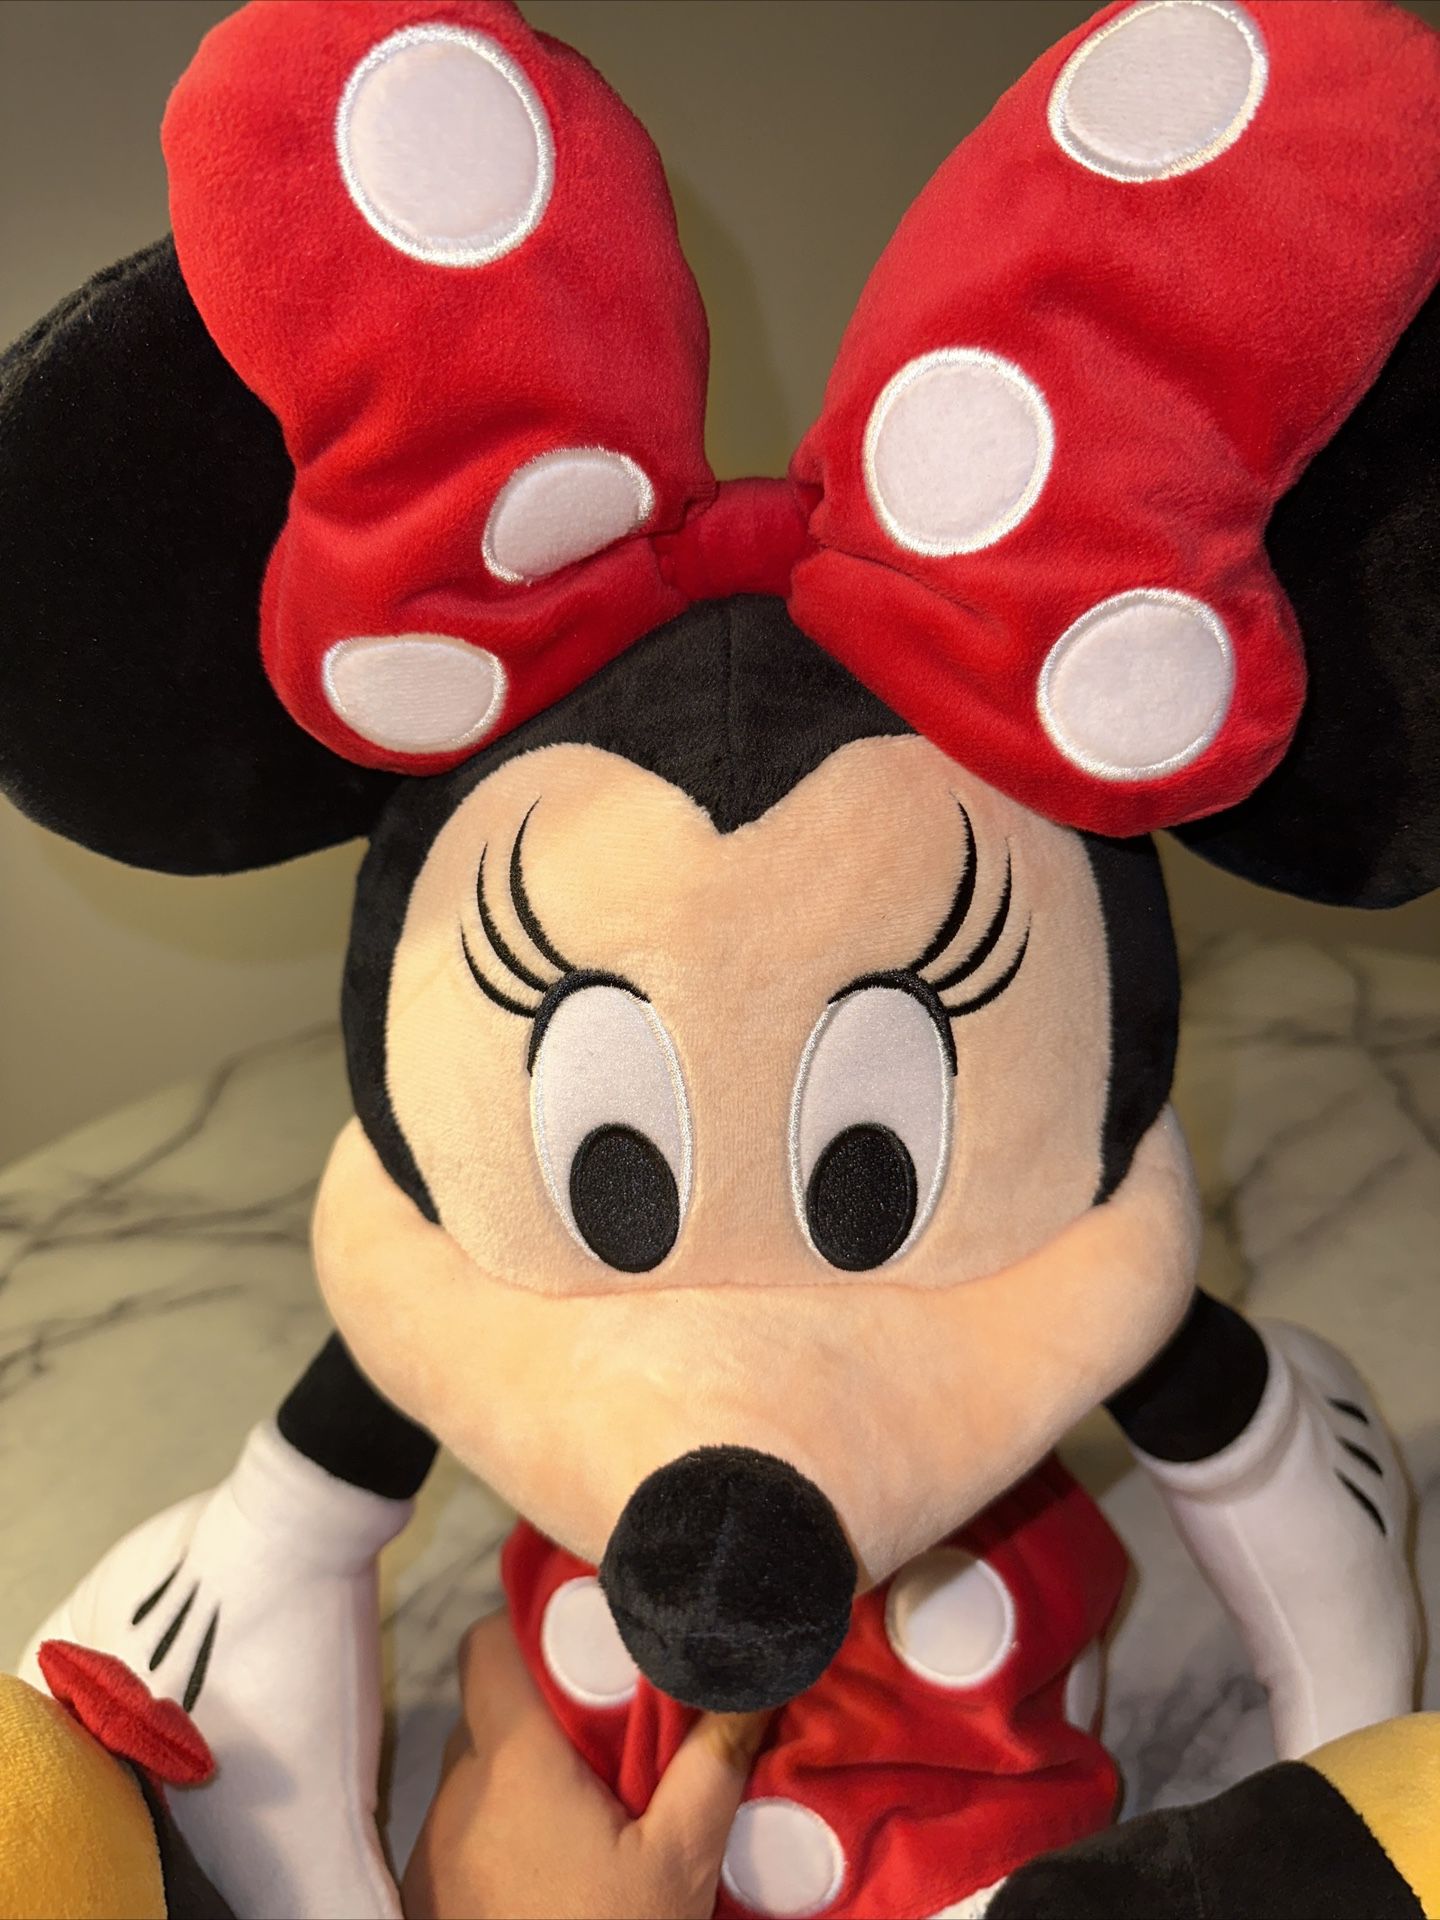 NWT MINT Disney Minnie Mouse Plush 26" Large Doll Classic Red Polka Dot Dress